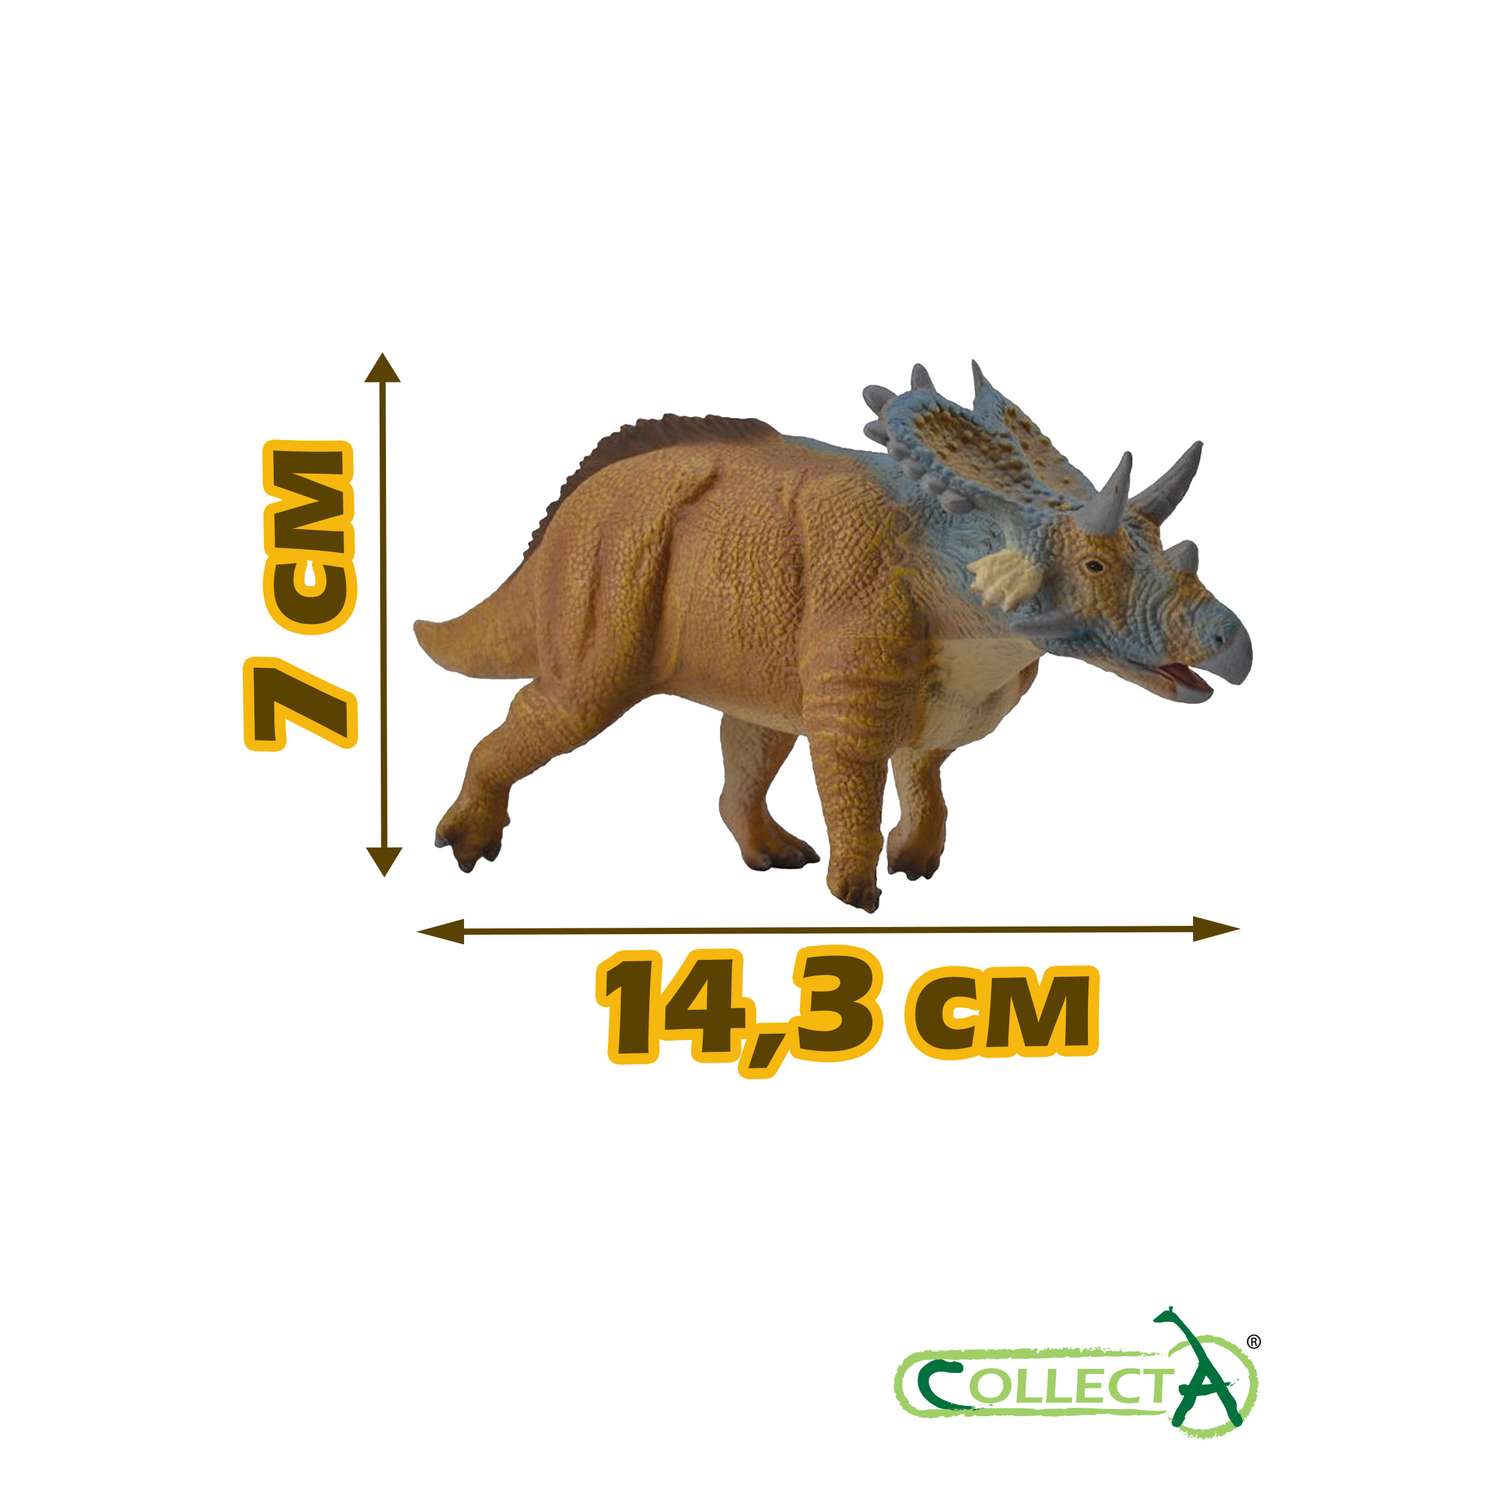 Игрушка Collecta Меркурицератопс фигурка динозавра - фото 2